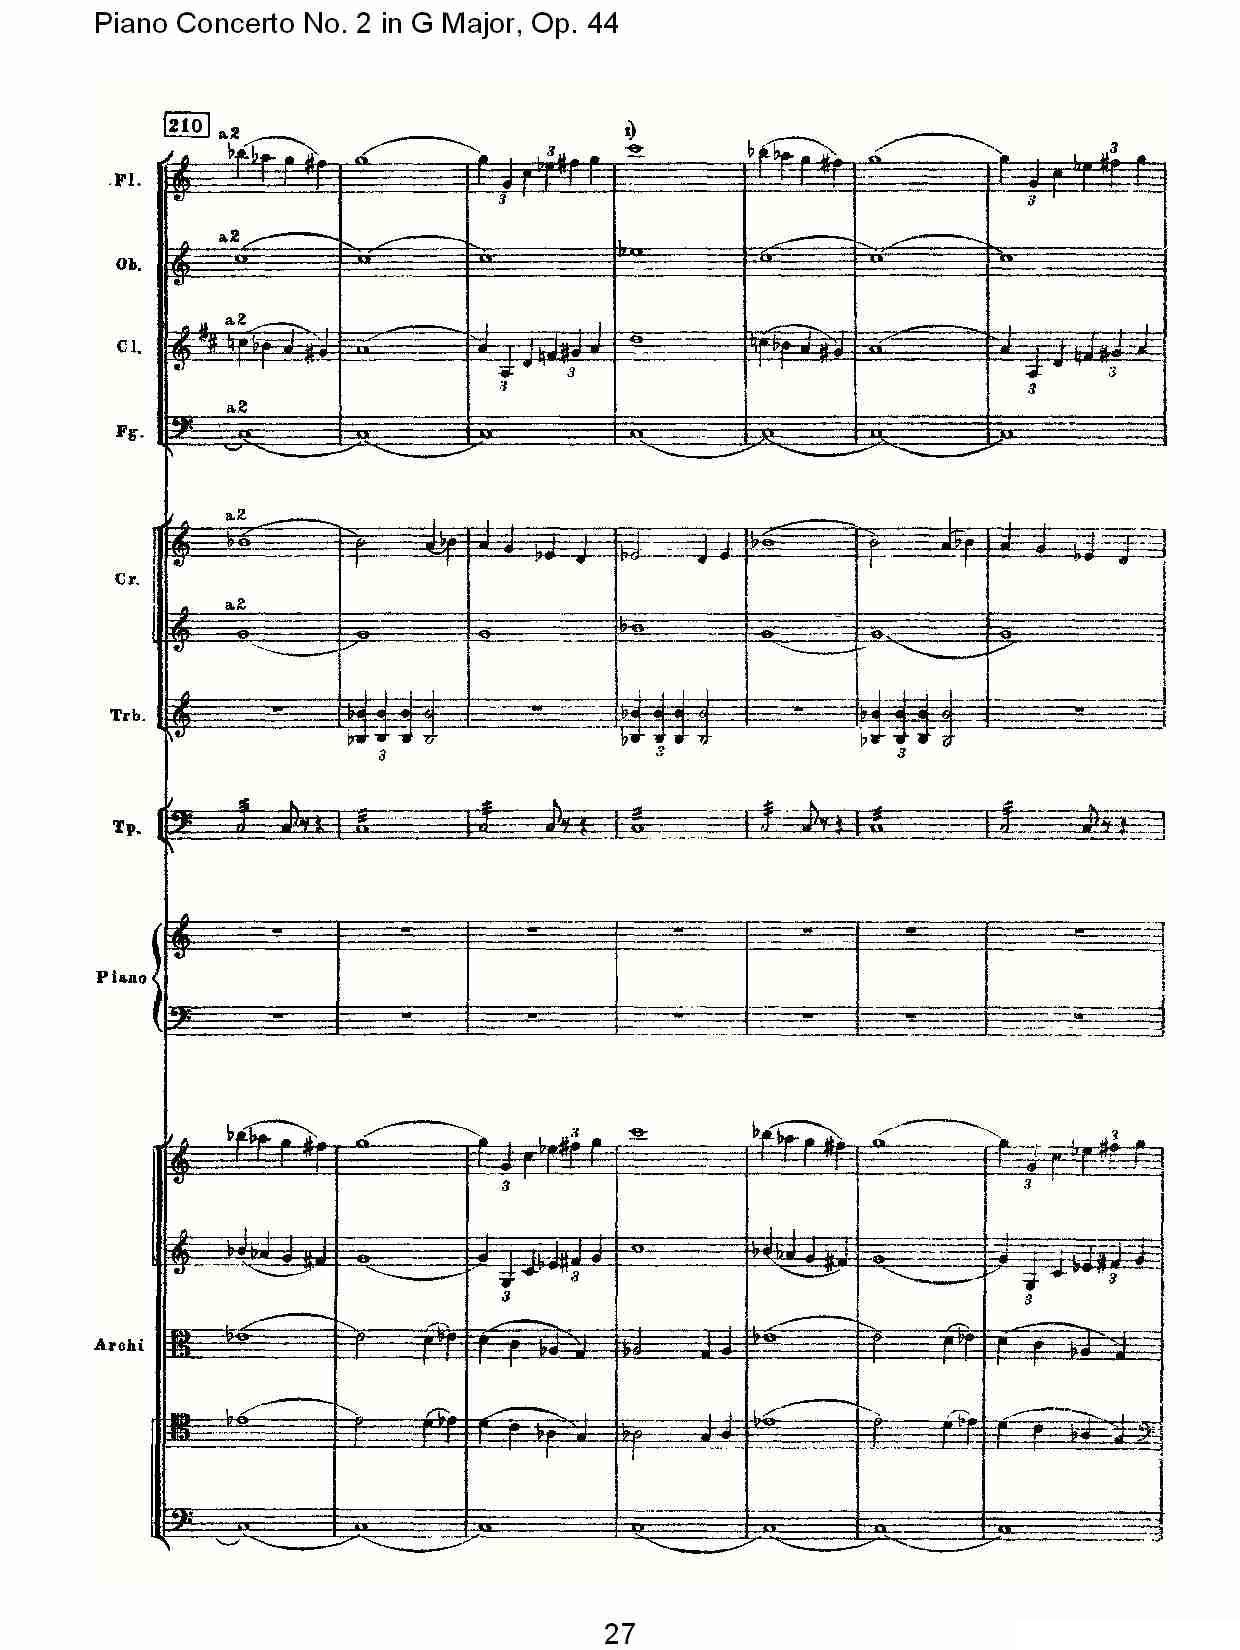 G大调第二钢琴协奏曲, Op.44第一乐章（一）钢琴曲谱（图27）